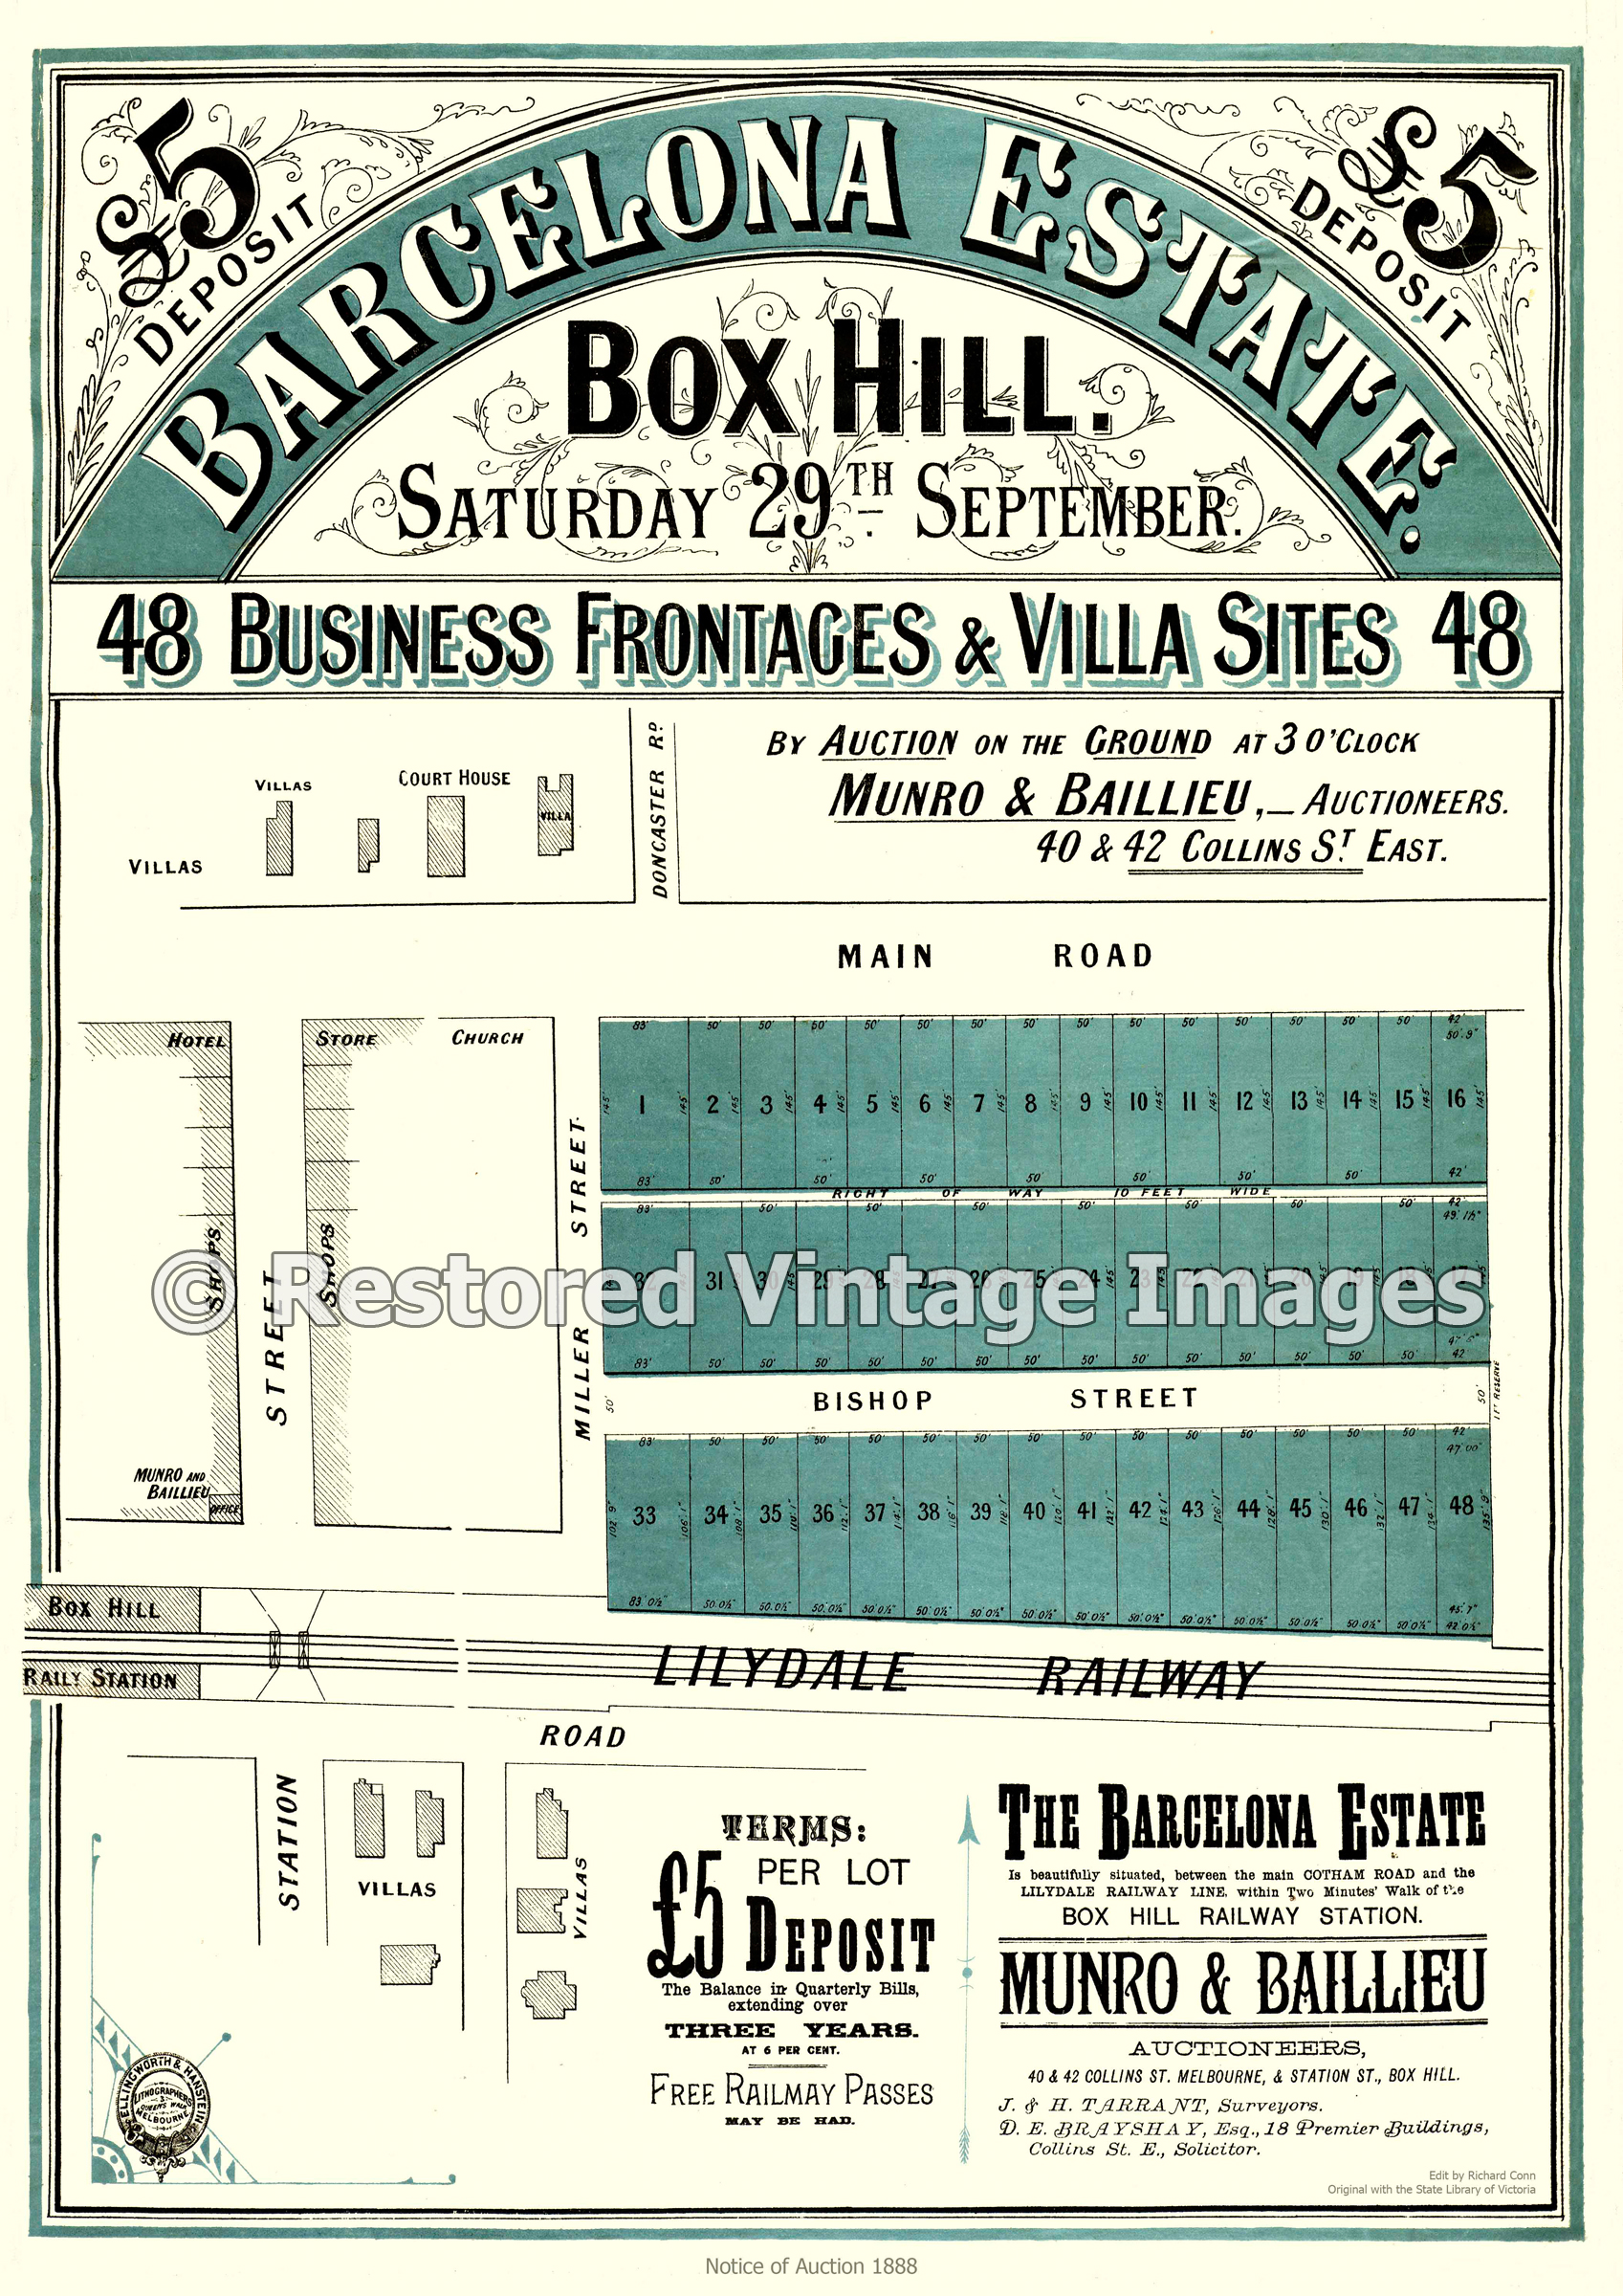 Barcelona Estate Box Hill 29th September 1888 – Box Hill